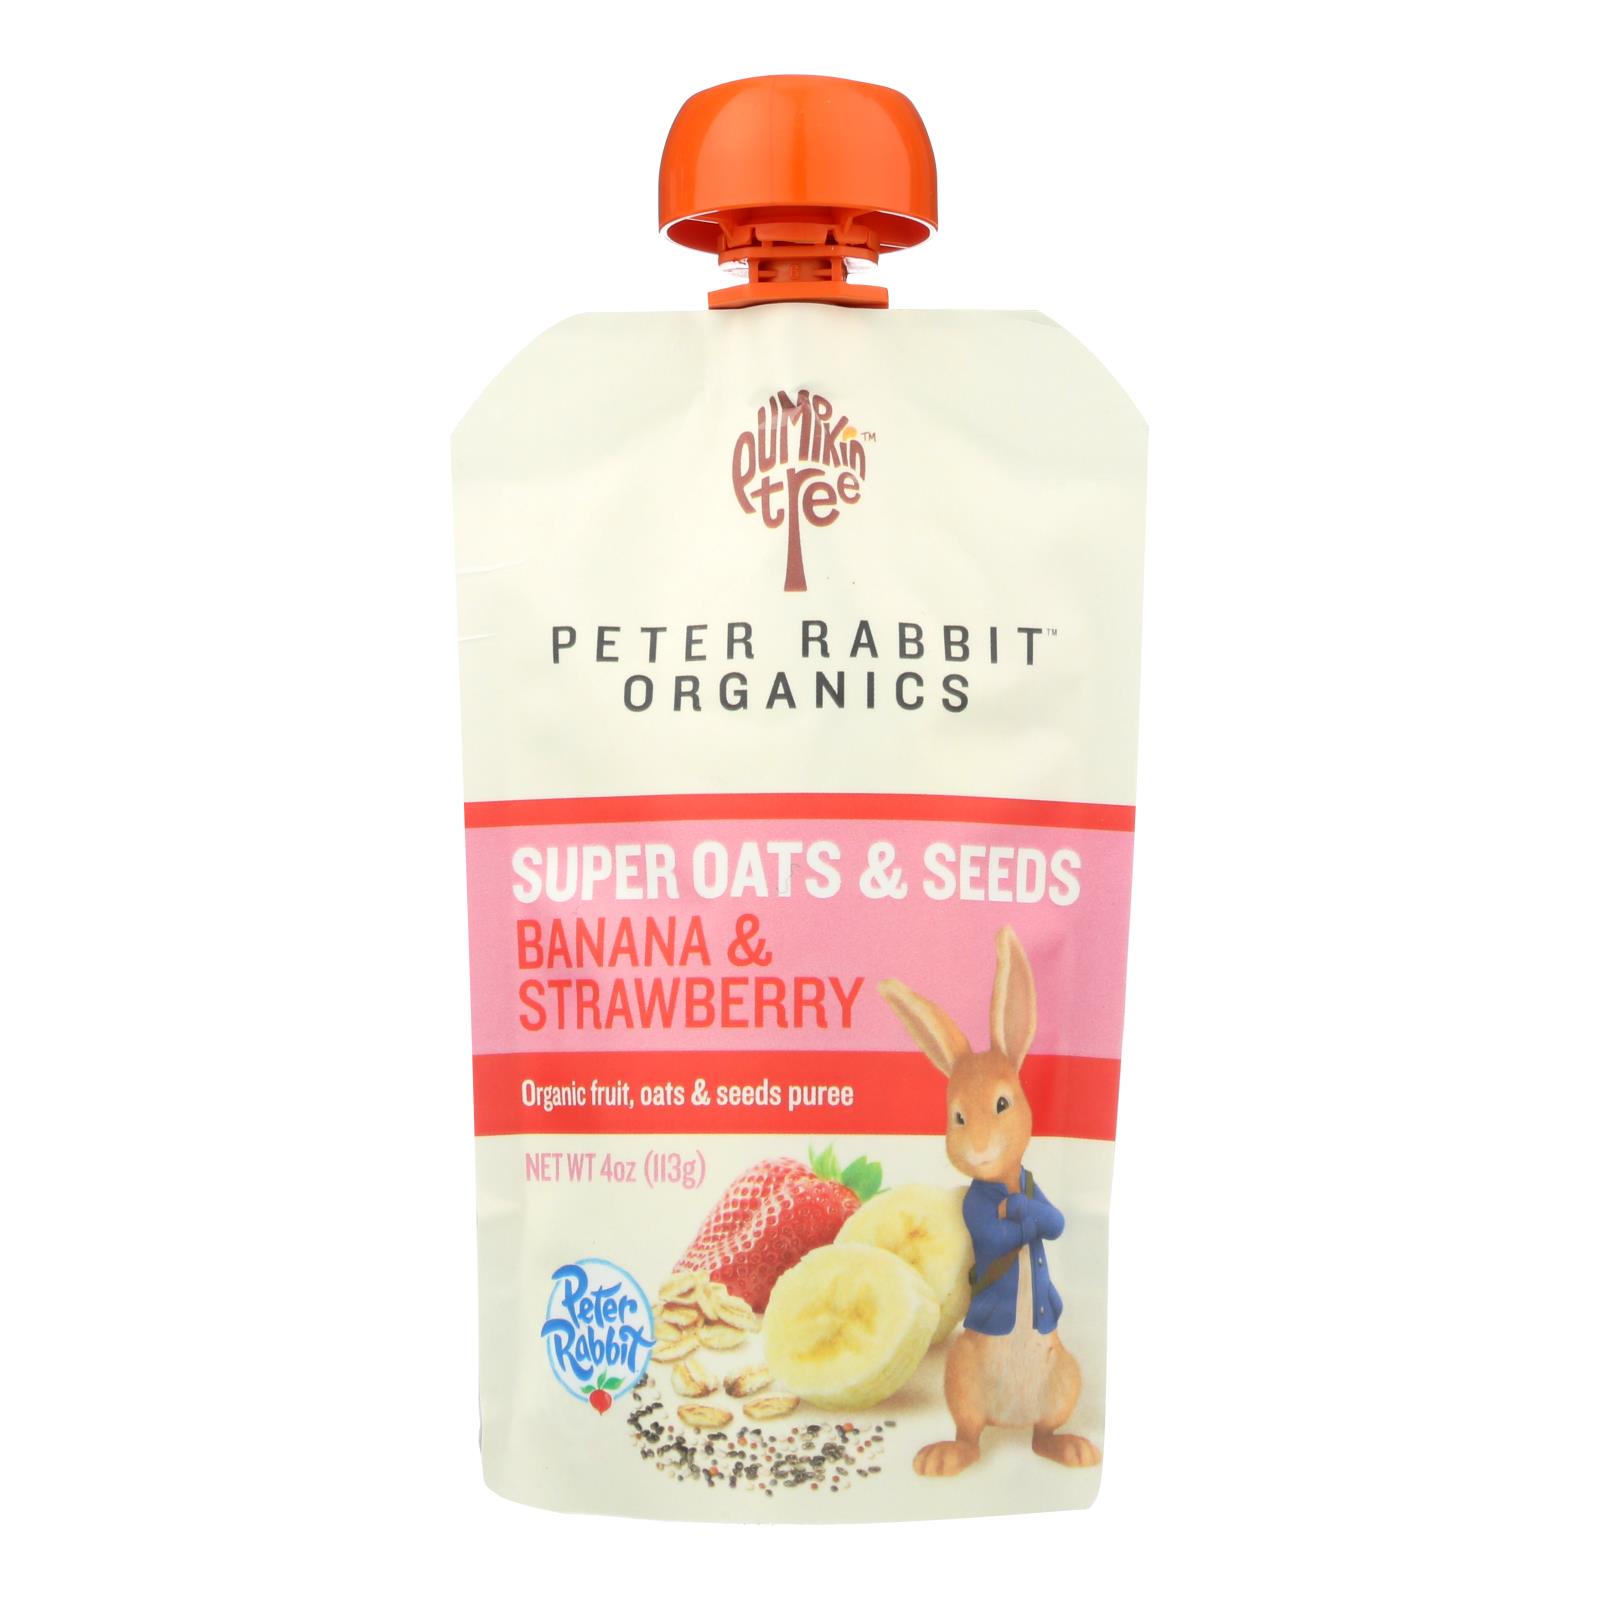 Peter Rabbit Organics - Oats&seeds Bana&straw - 10개 묶음상품 - 4 OZ